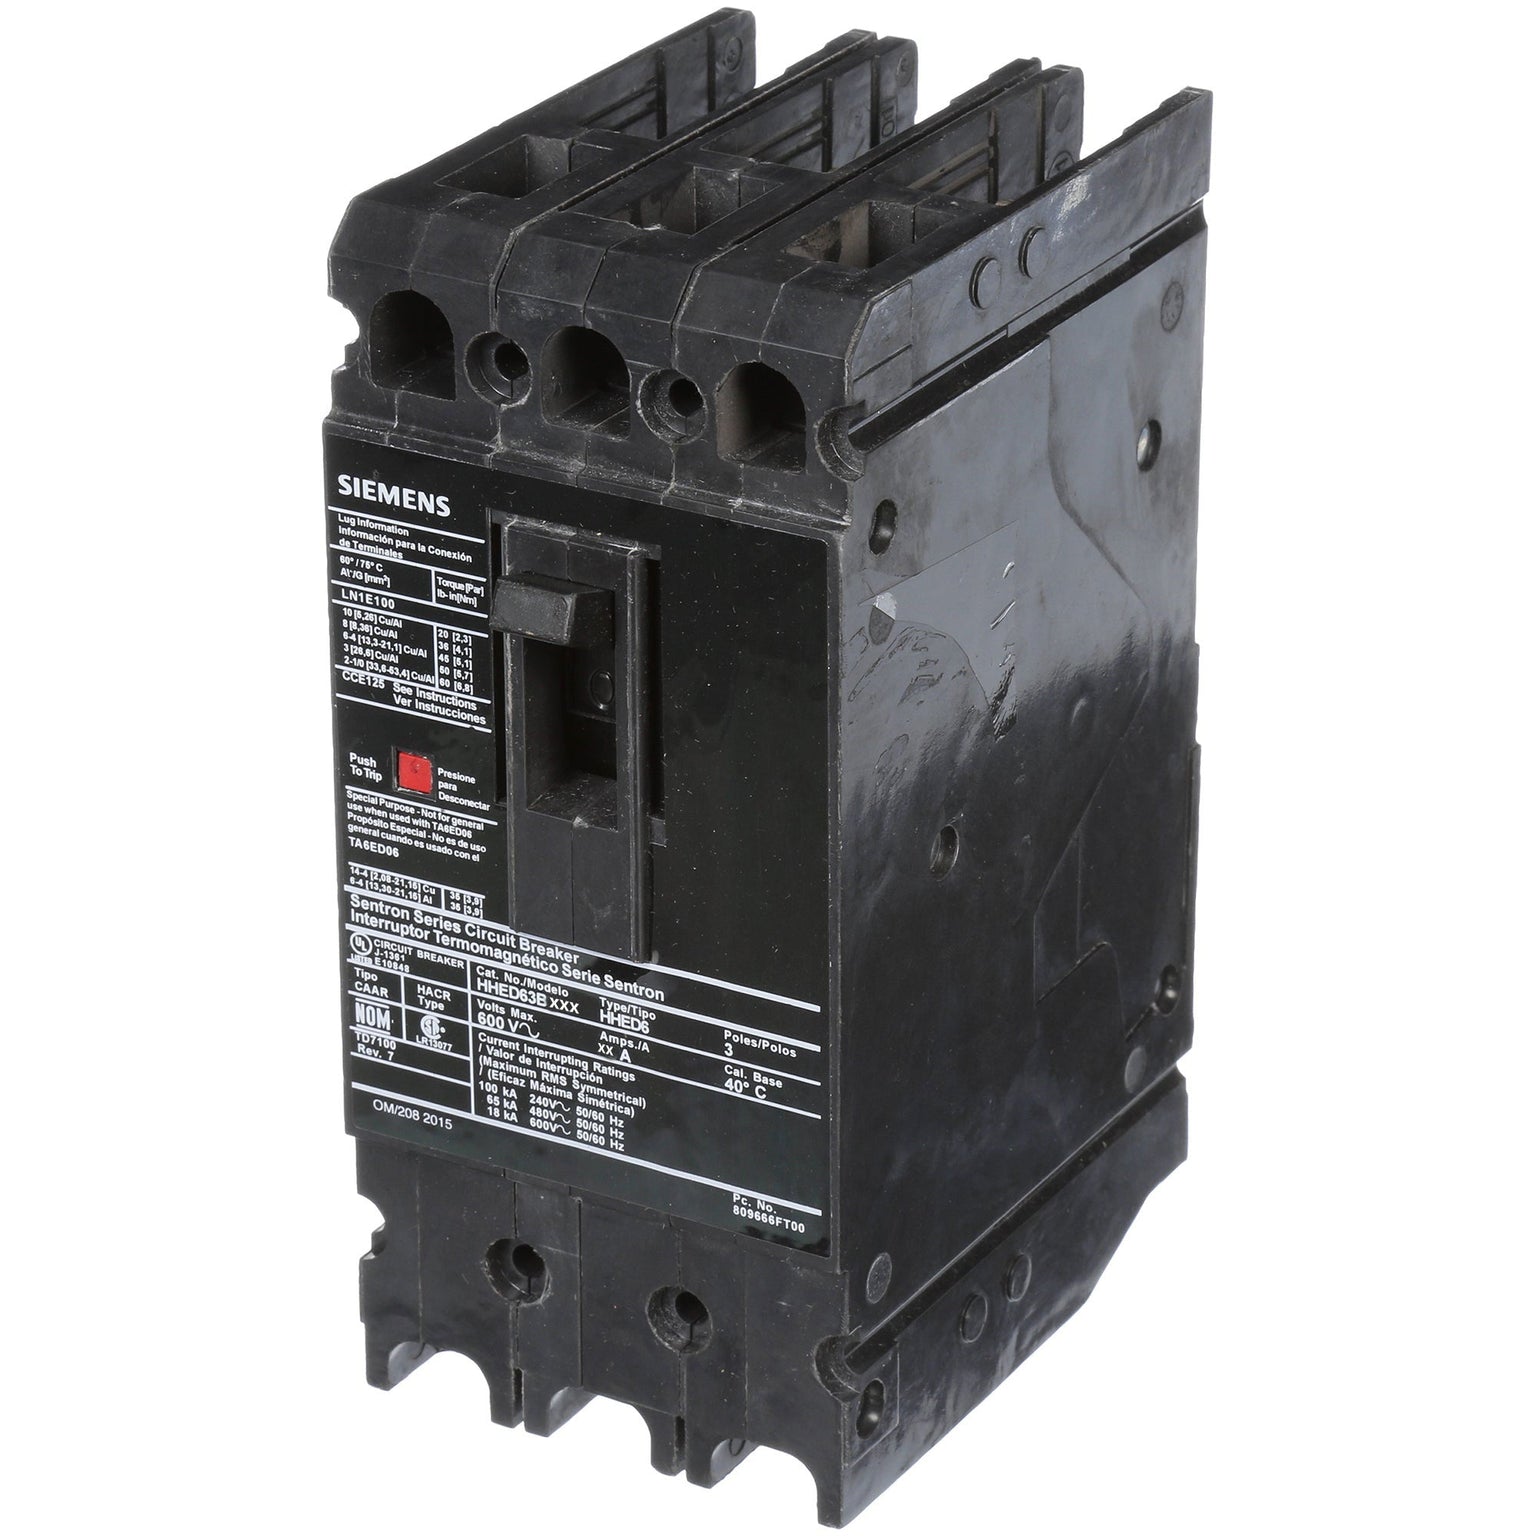 HHED63B030 - Siemens - Molded Case Circuit Breaker